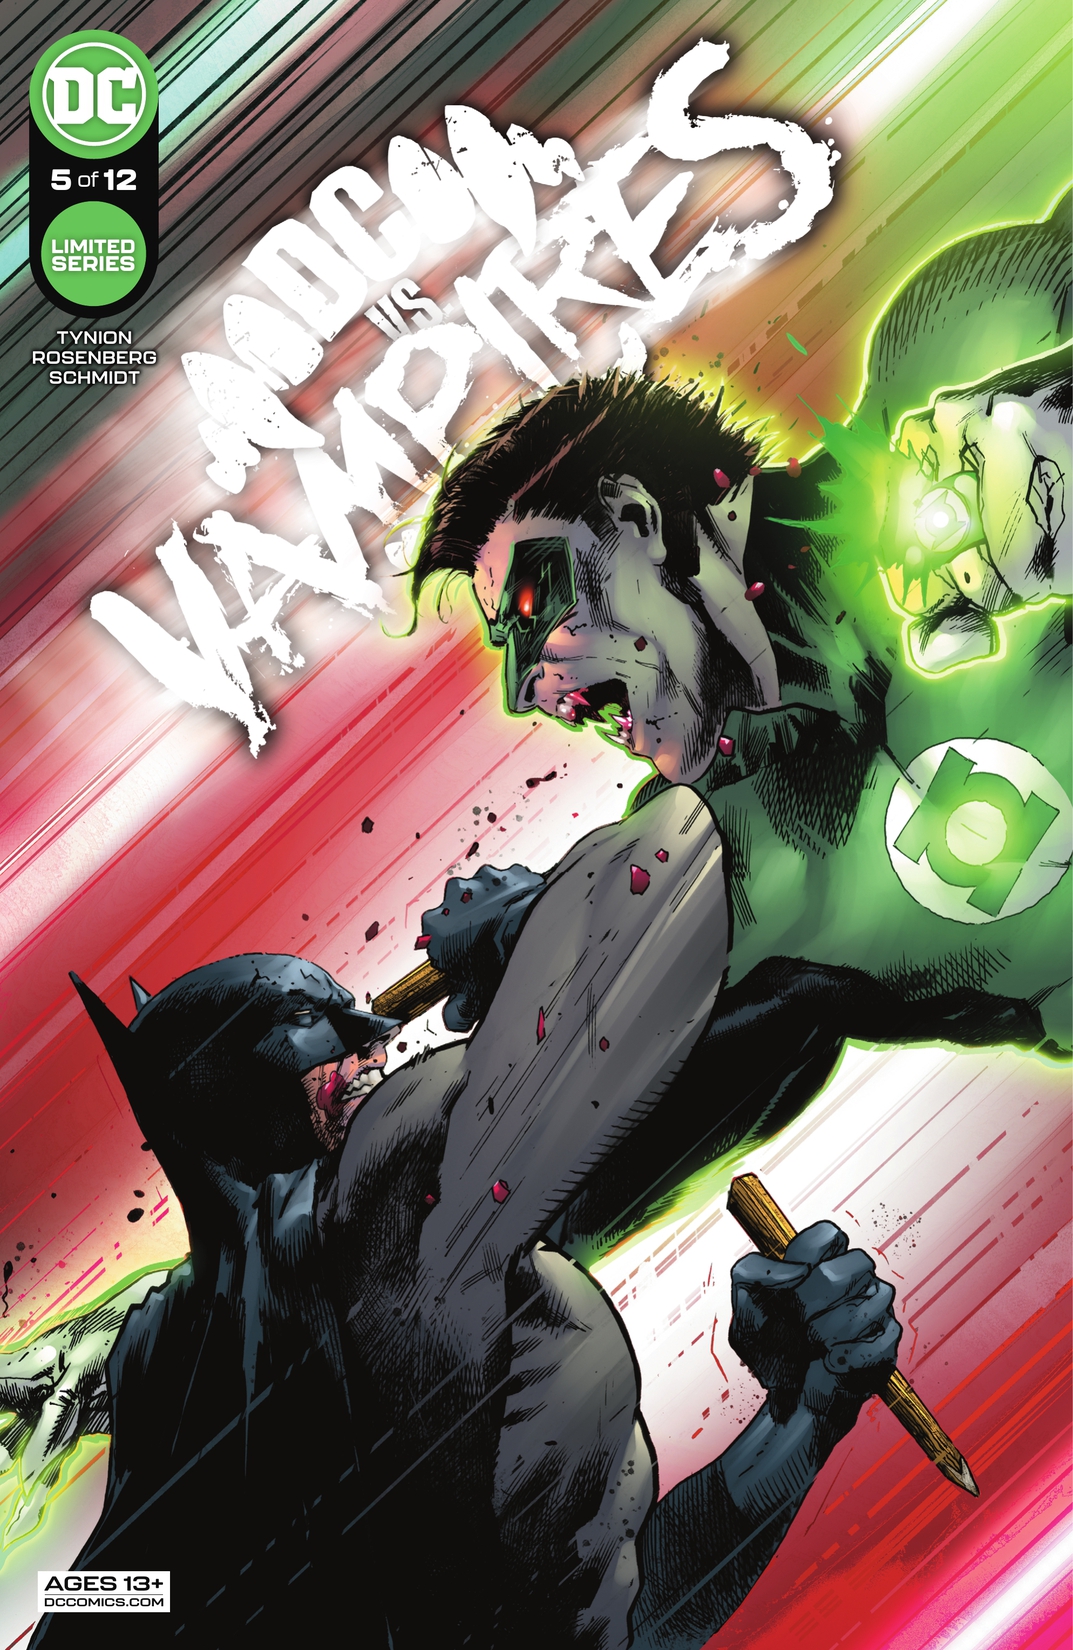 DC vs. Vampires #5 preview images